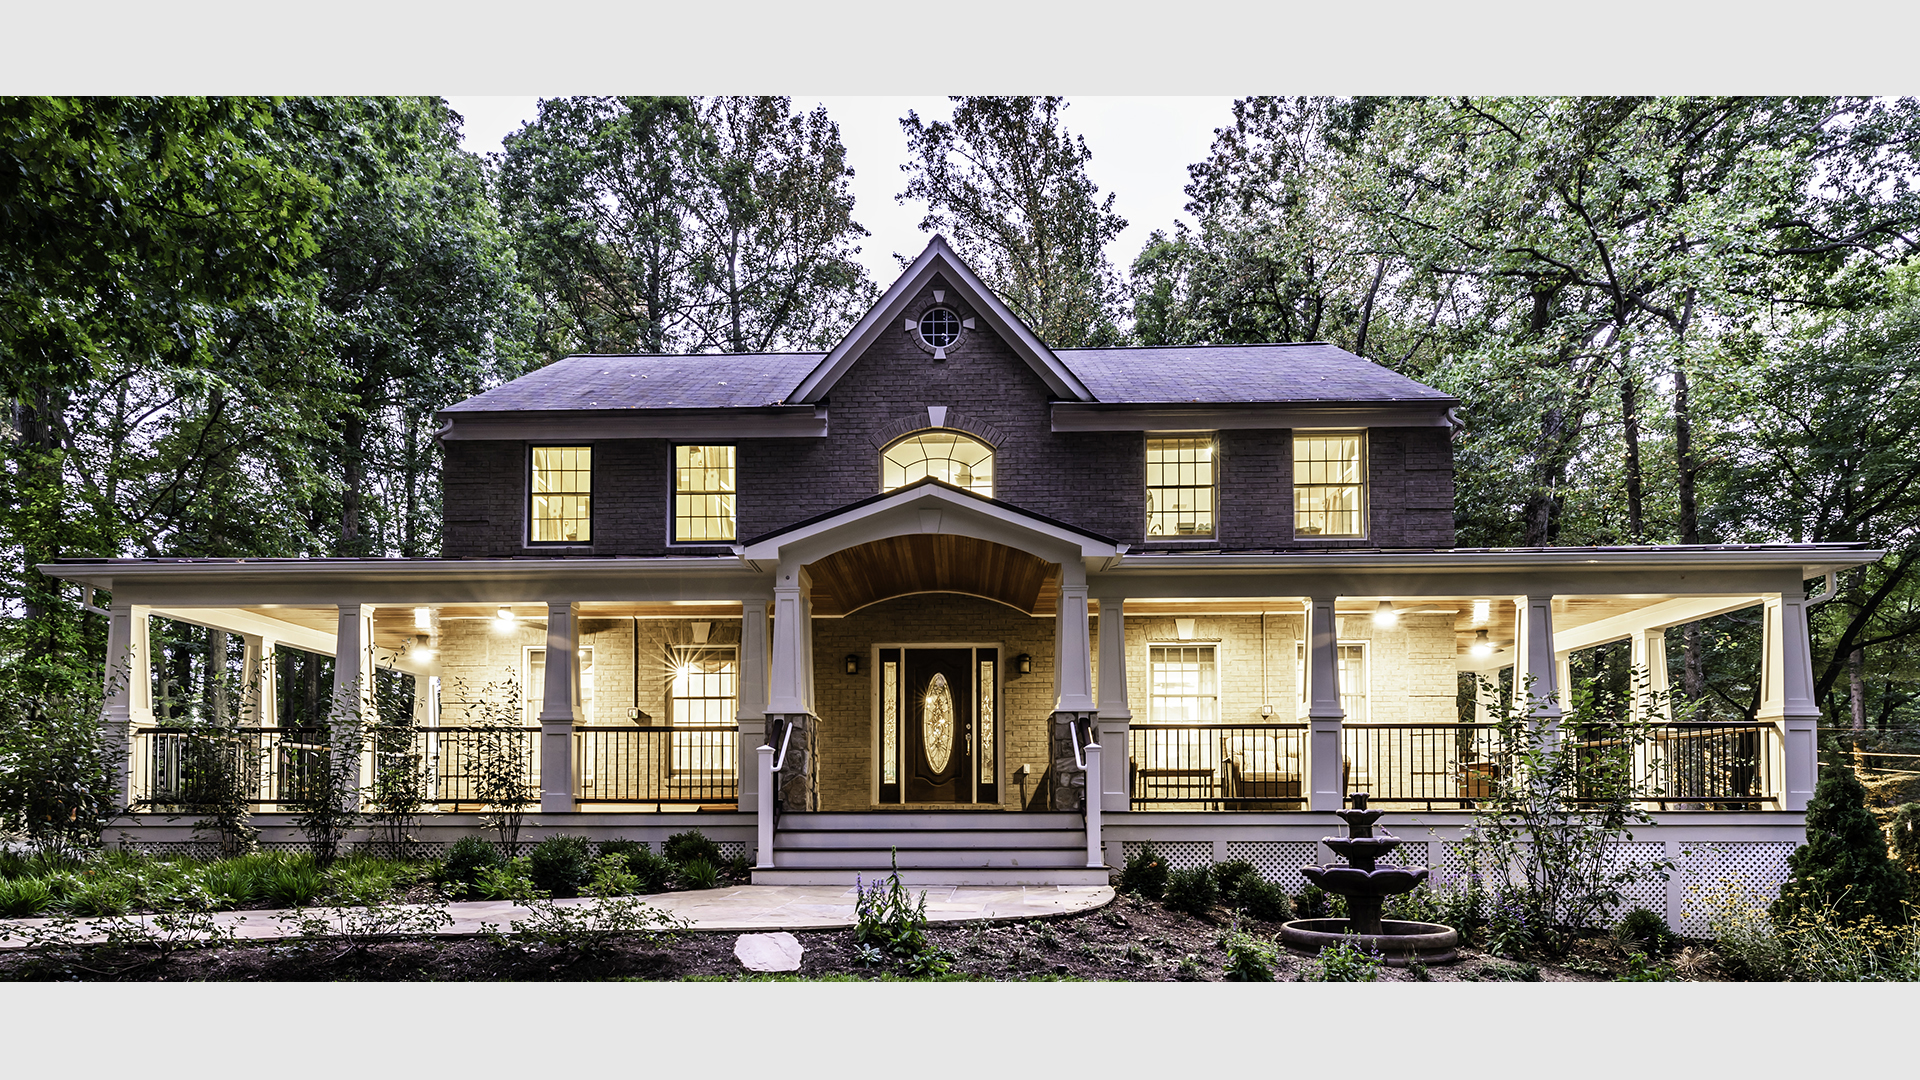 2020 NARI Capital CotY Grand Award Winner, Residential Landscape Design/ Outdoor Living $100,000 to $250,000